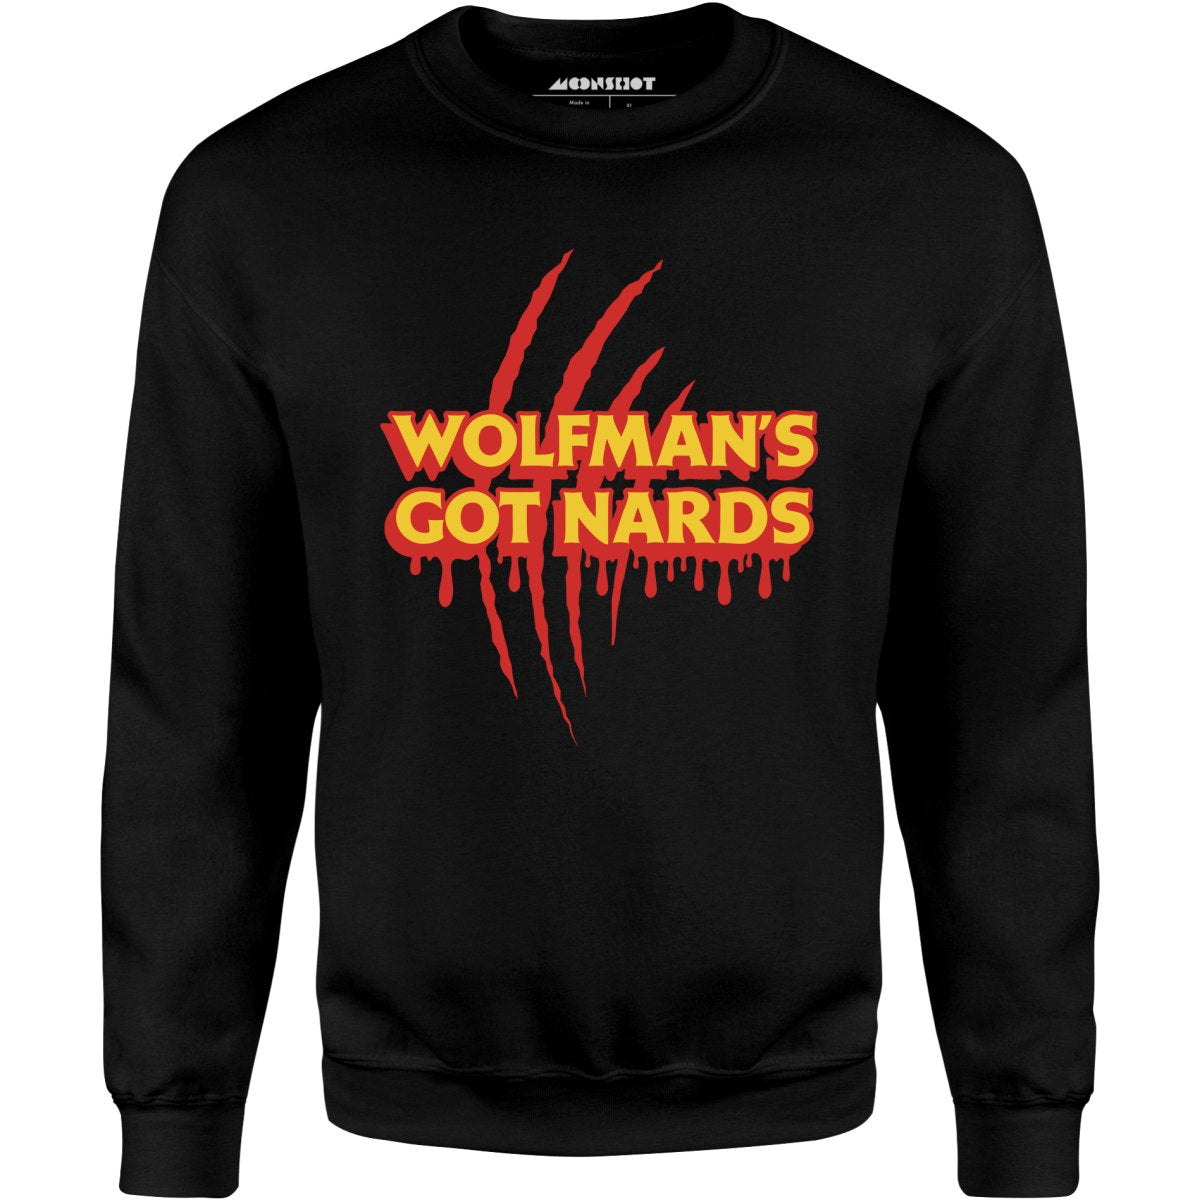 Wolfman's Got Nards - Unisex Sweatshirt